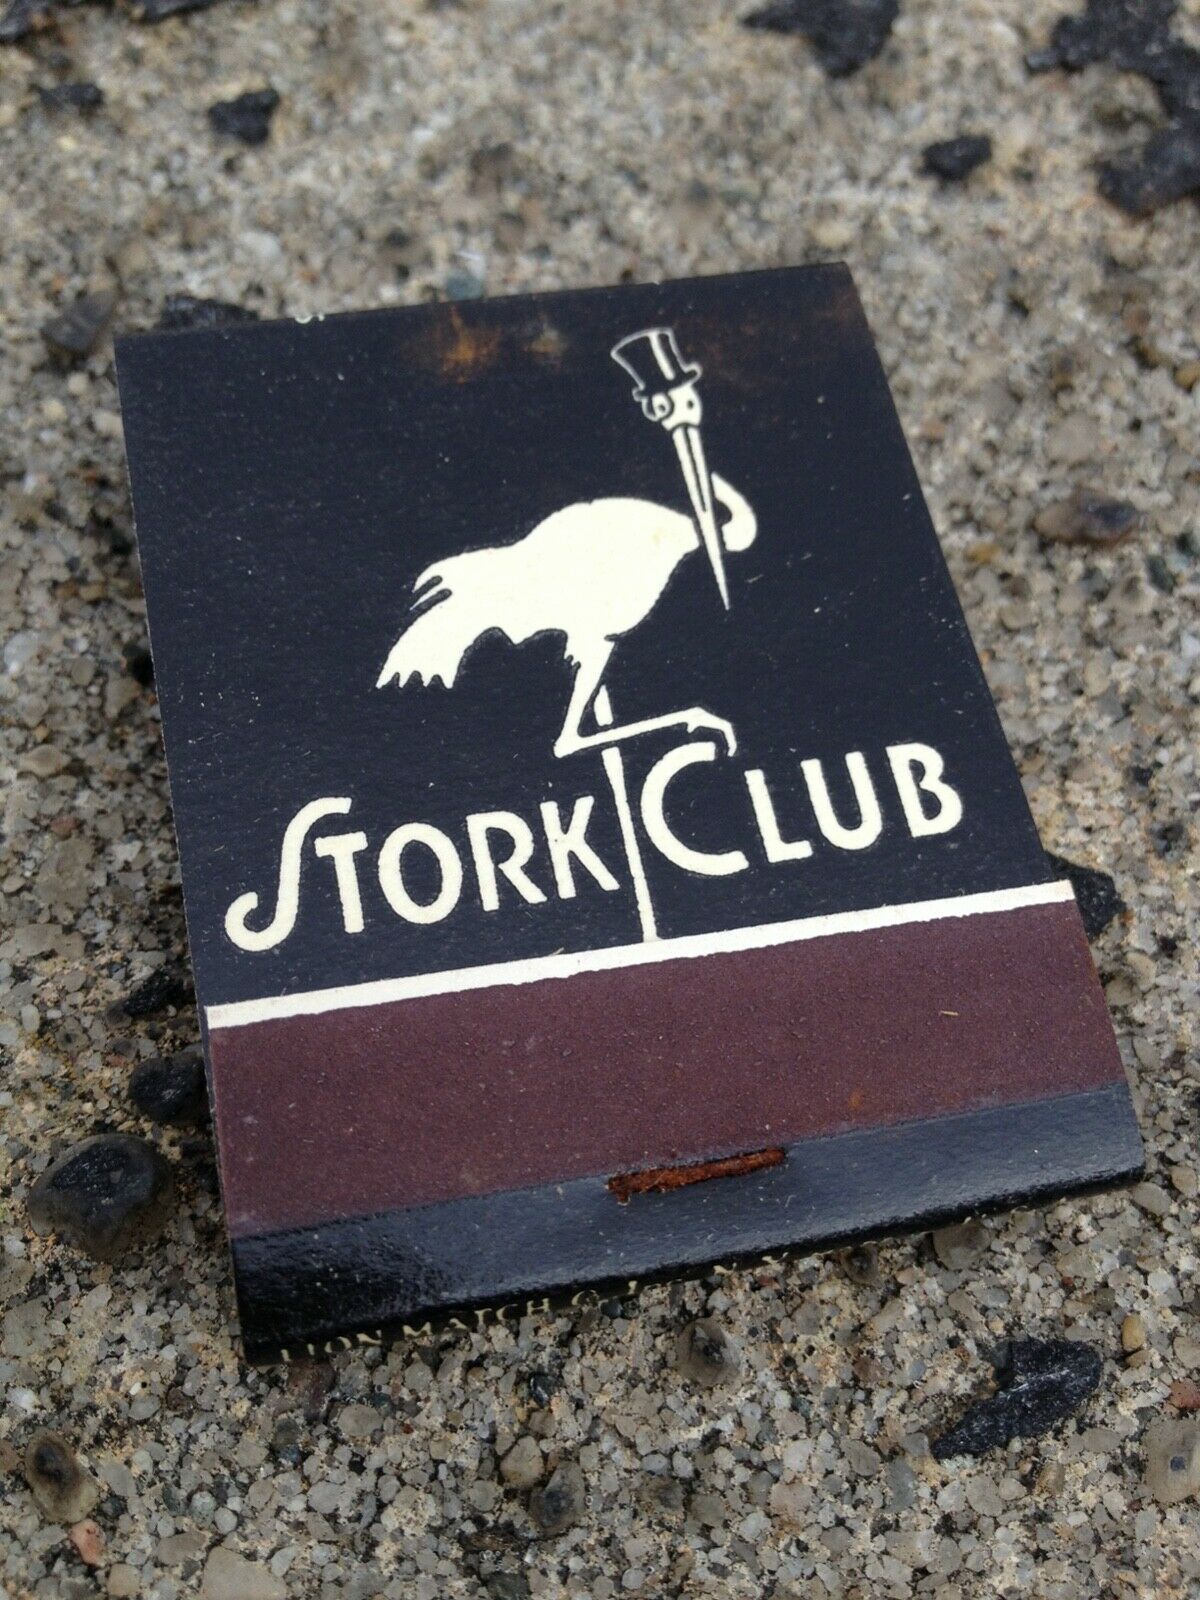 Original Unused Vintage Stork Club Matchbook Excellent Condition